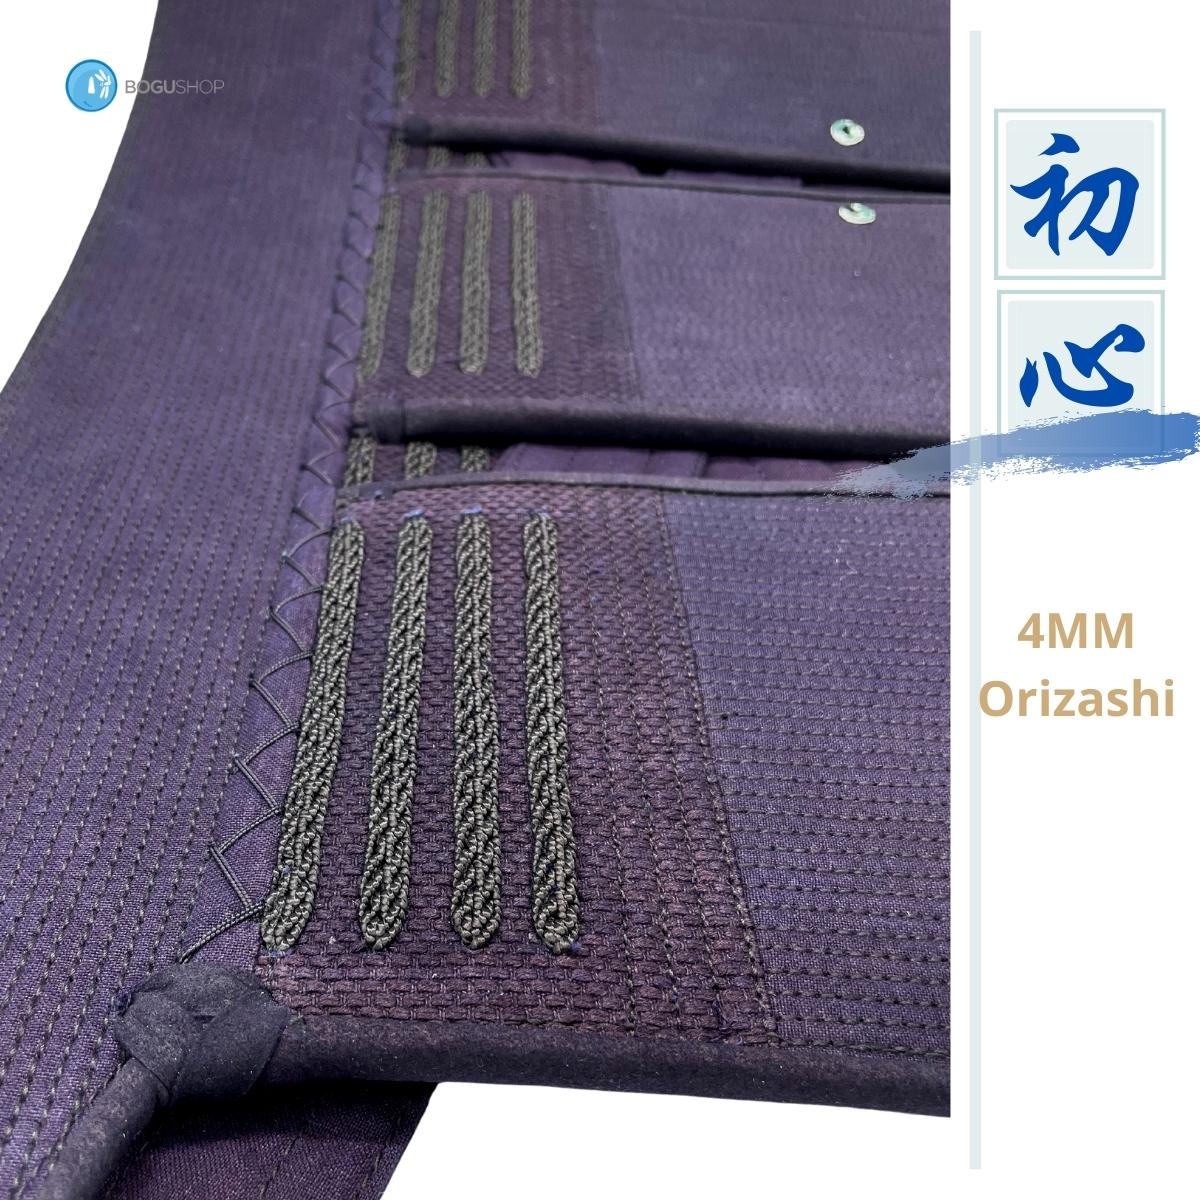 [Orizashi / Clarino] 4mm High Quality Machine Stitched Tare